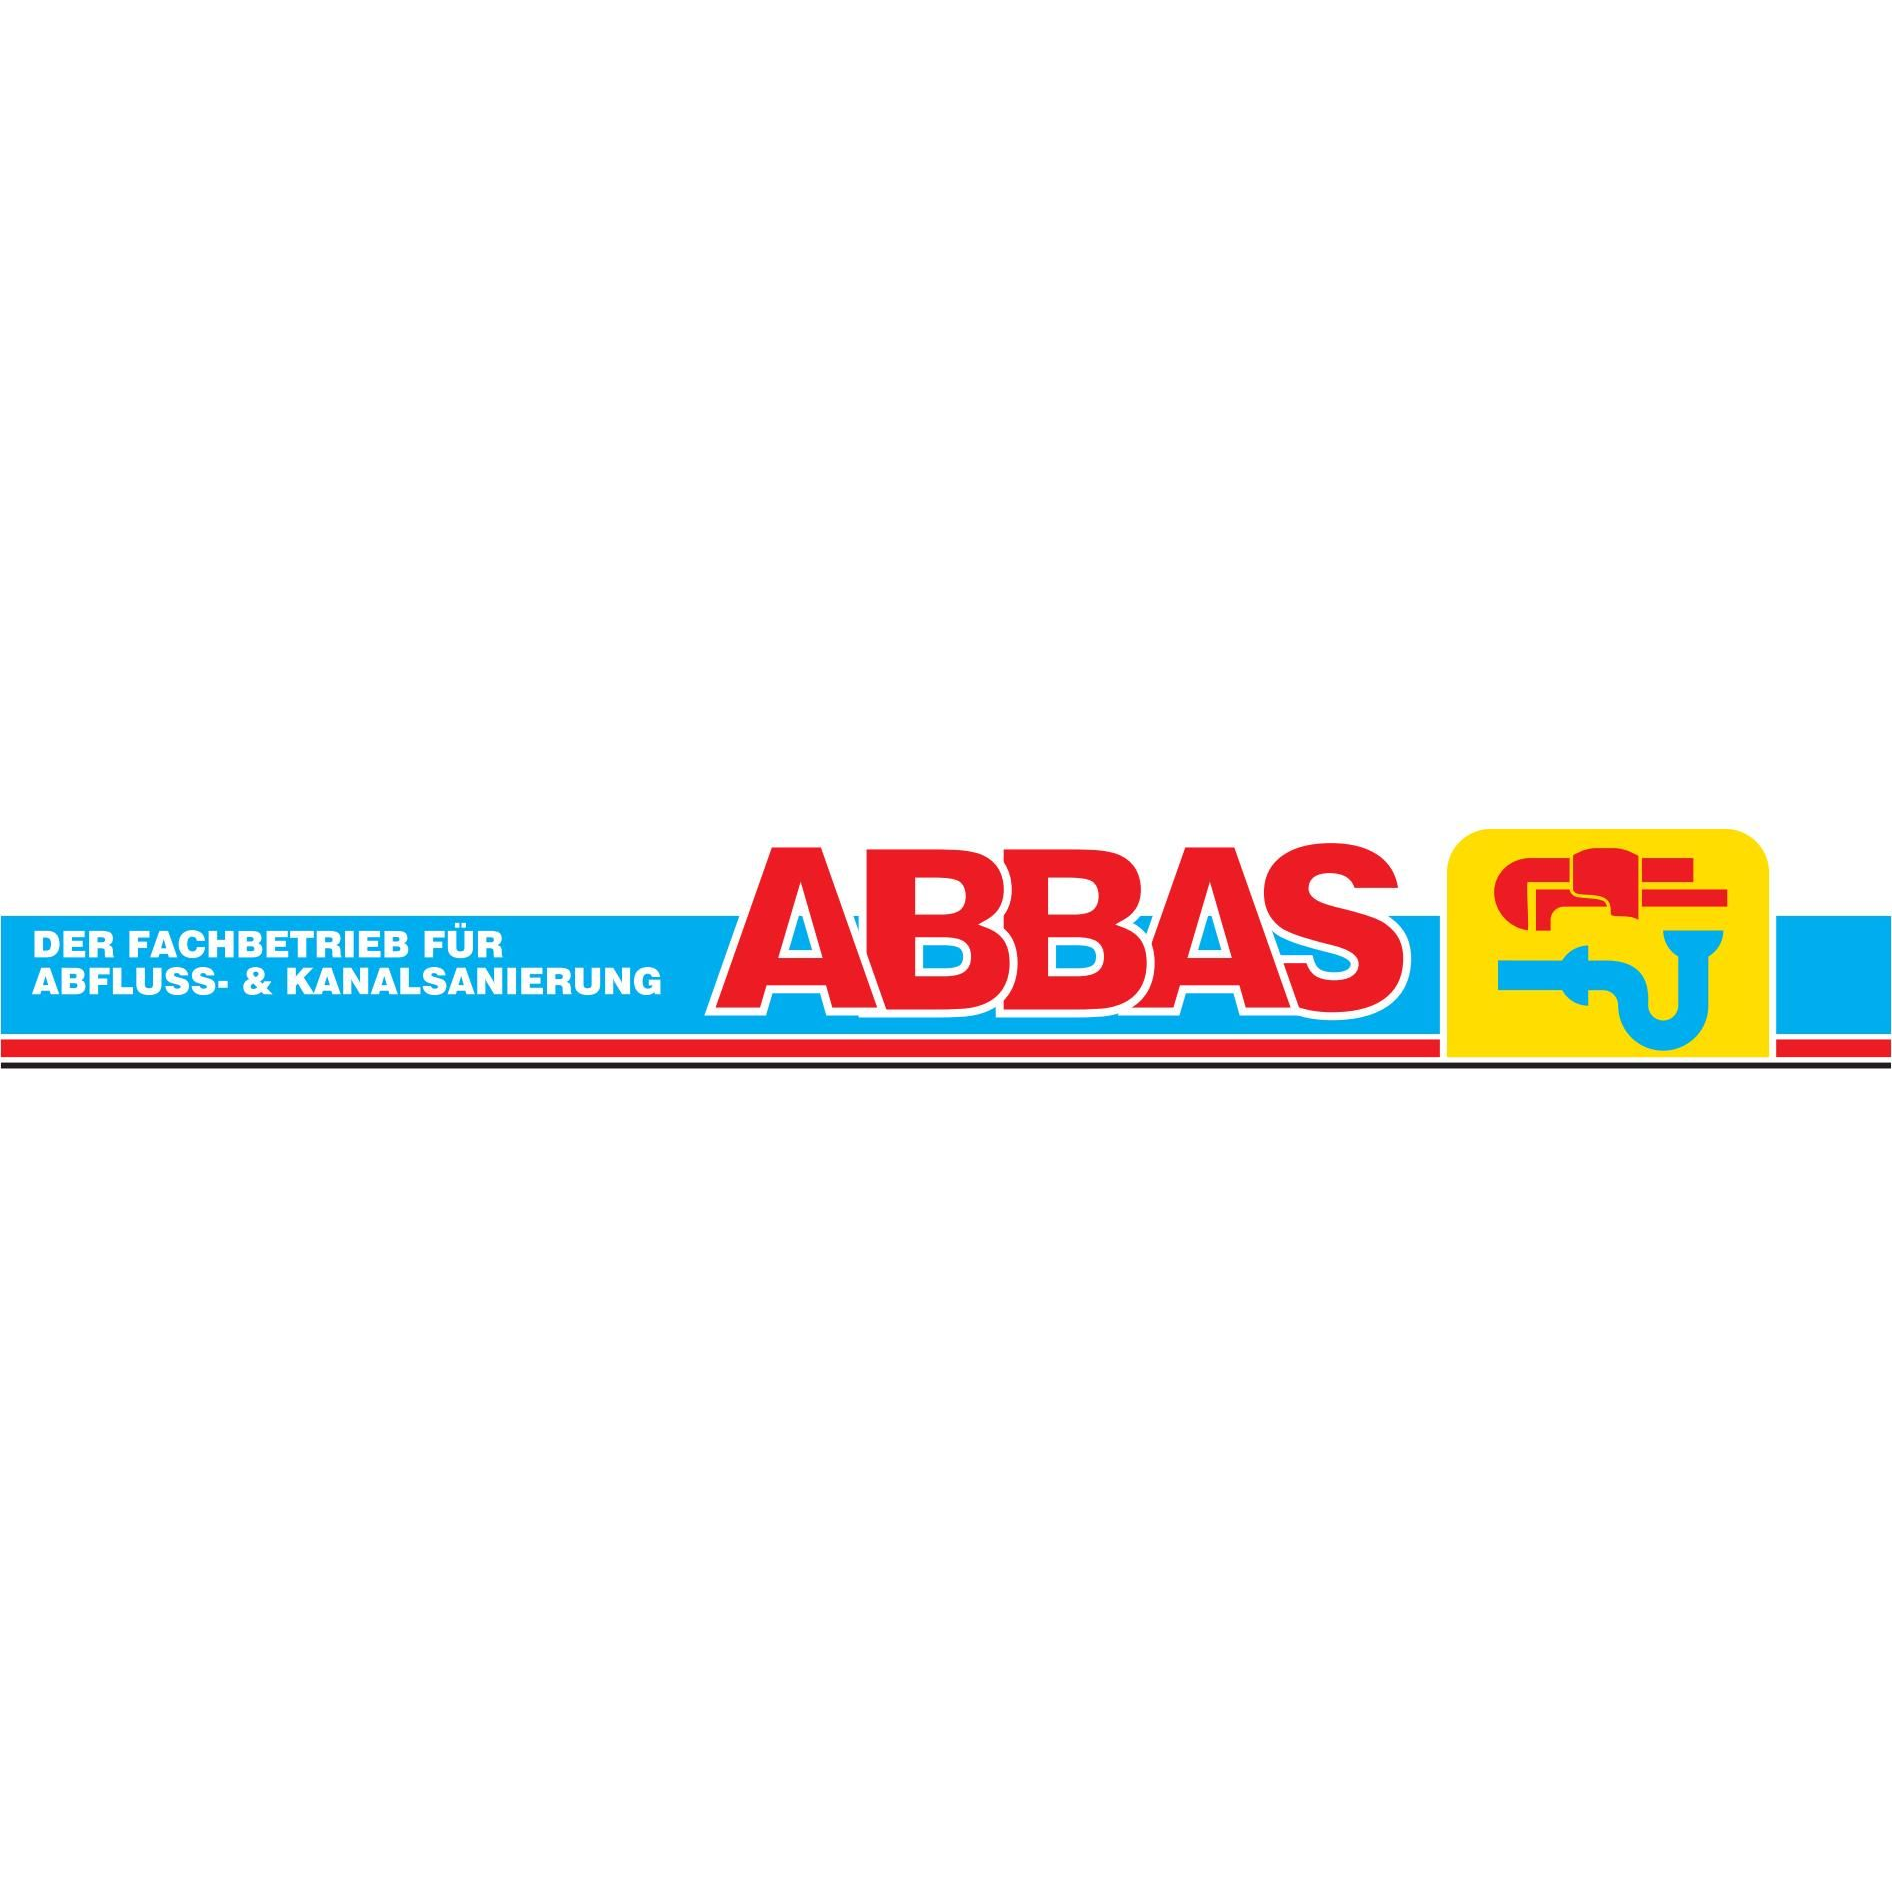 ABBAS Kanalsanierung e.K. Logo